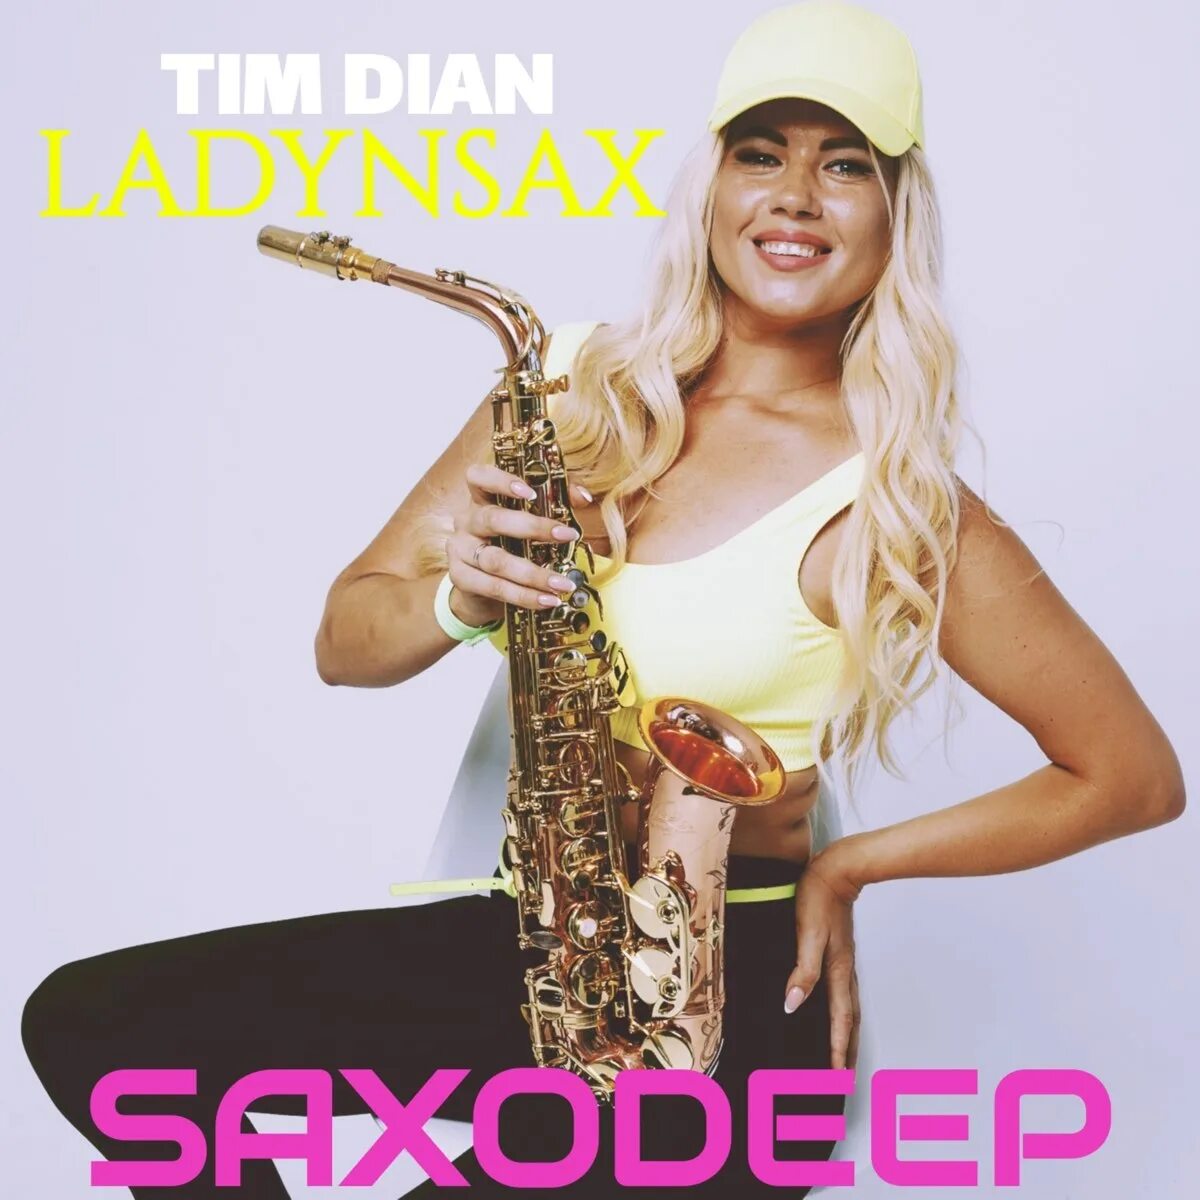 Soul ladynsax. Saxodeep ladynsax, tim Dian. Ladynsax блоггер. Ladynsax обложка.